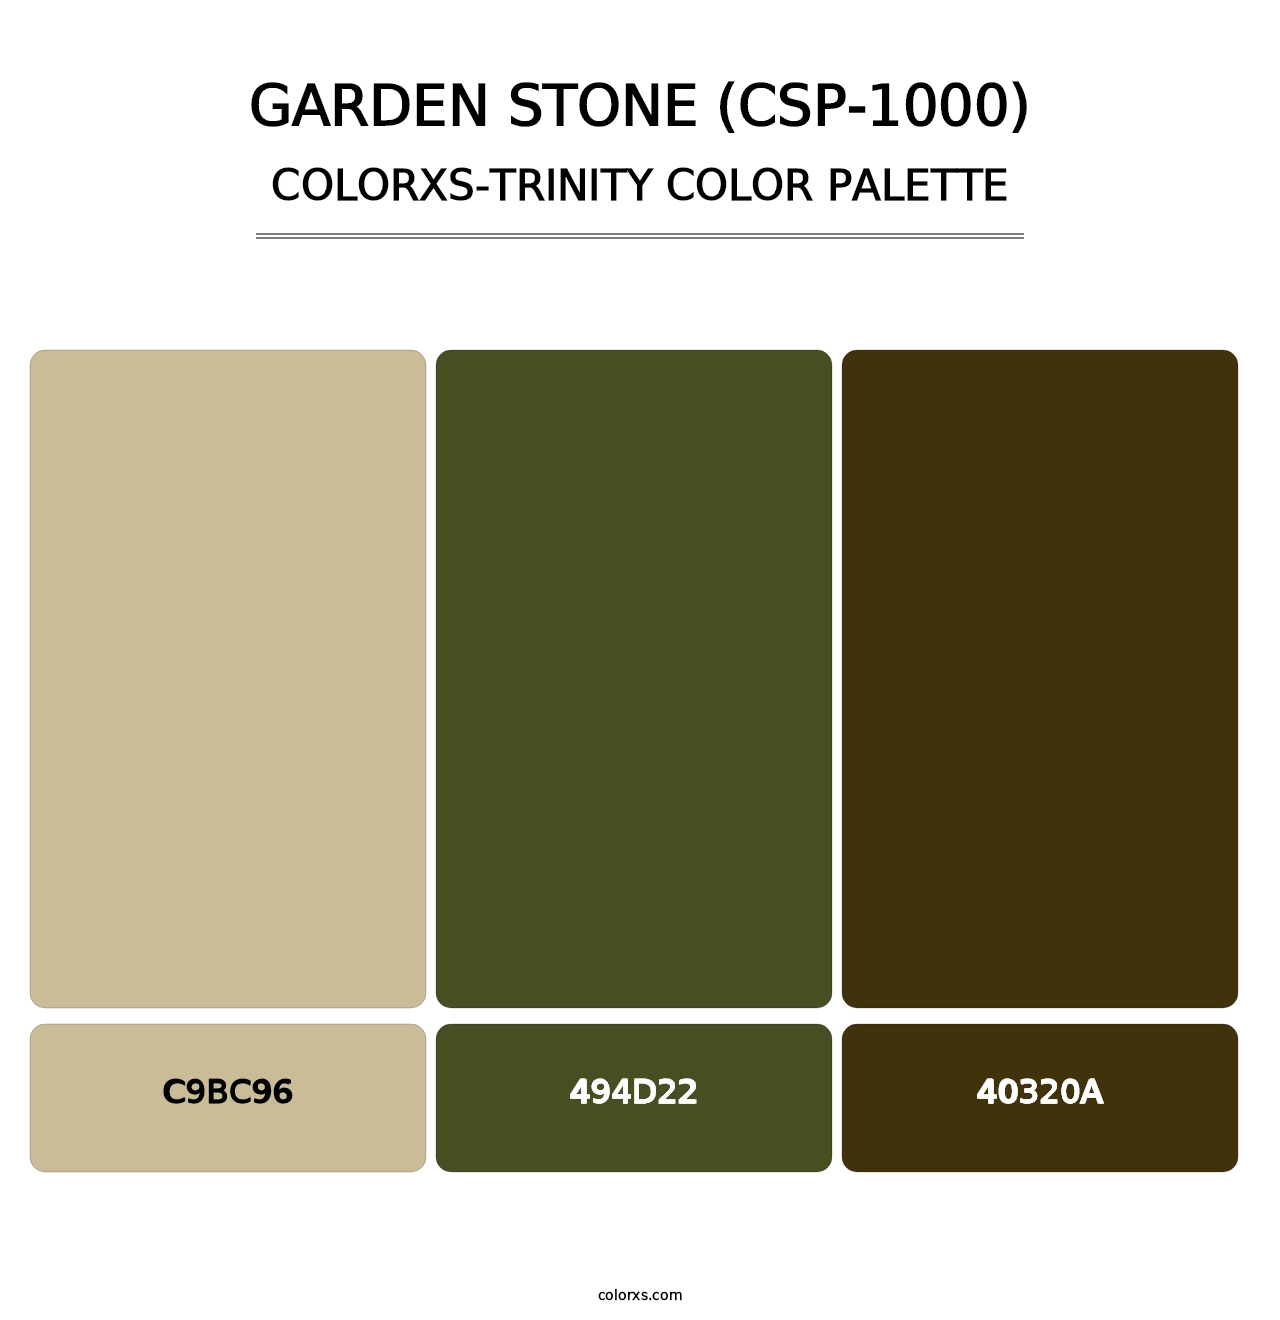 Garden Stone (CSP-1000) - Colorxs Trinity Palette